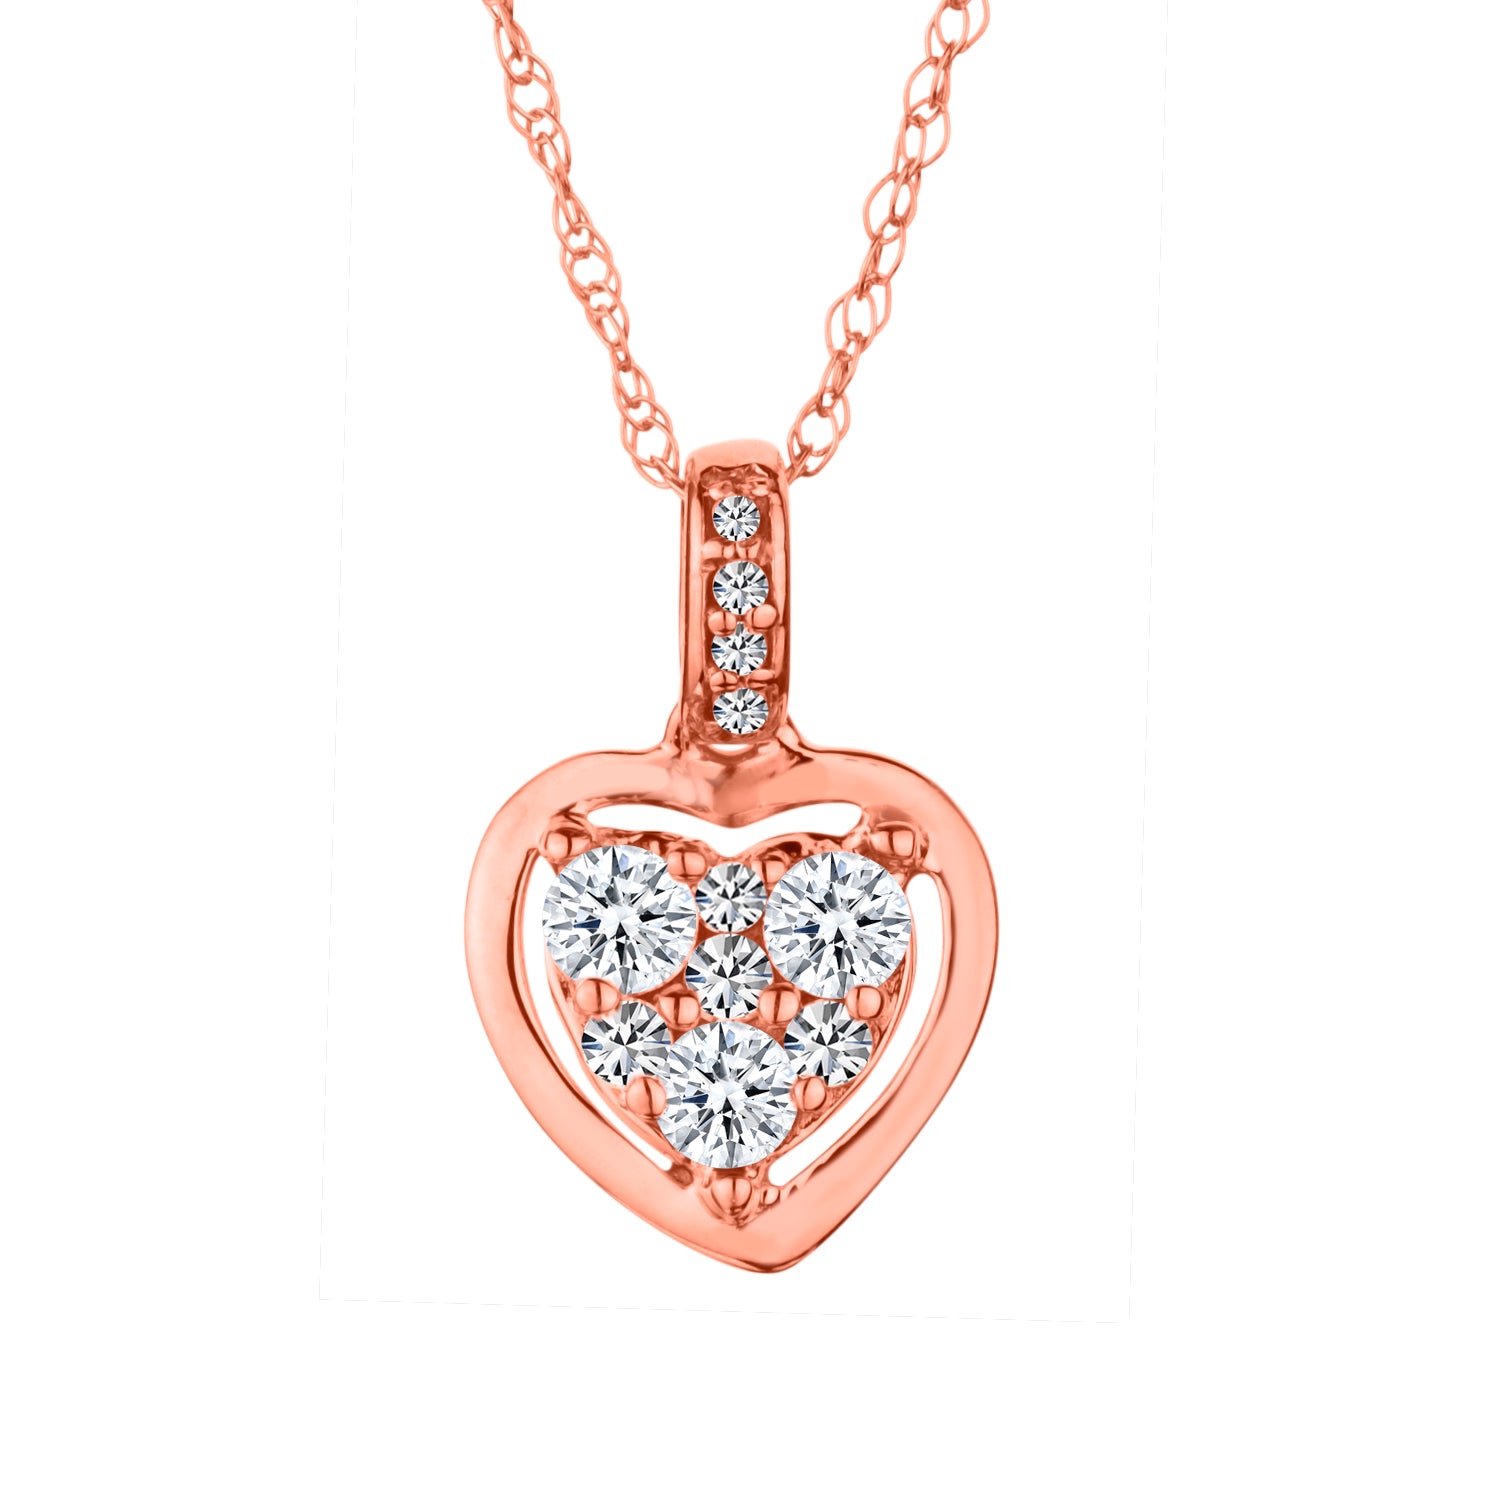 .21 Carat Heart Diamond Pendant,  10kt Rose Gold. Necklaces and Pendants. Griffin Jewellery Designs.